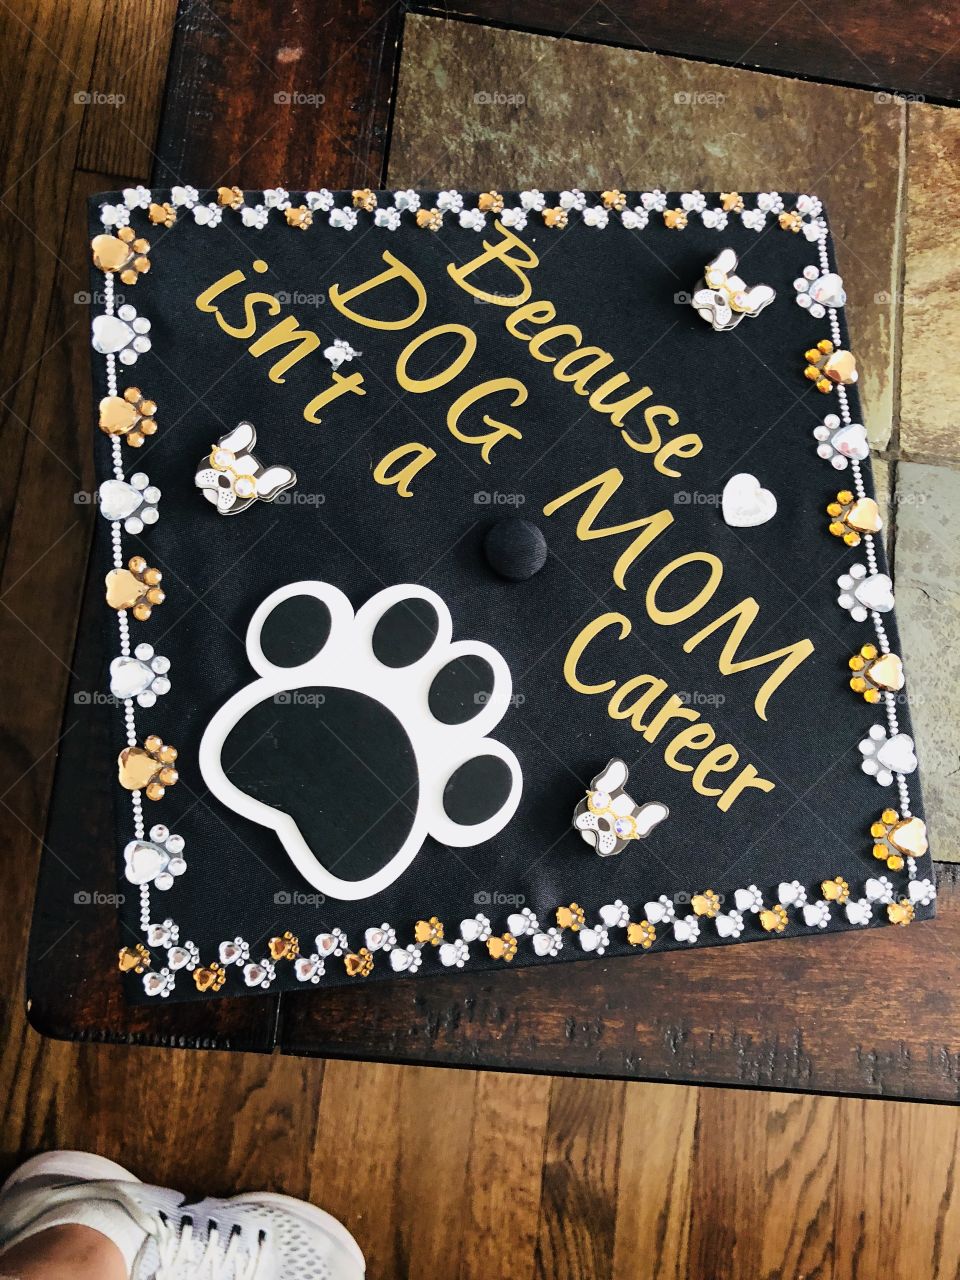 Graduation cap for dog lovers! 